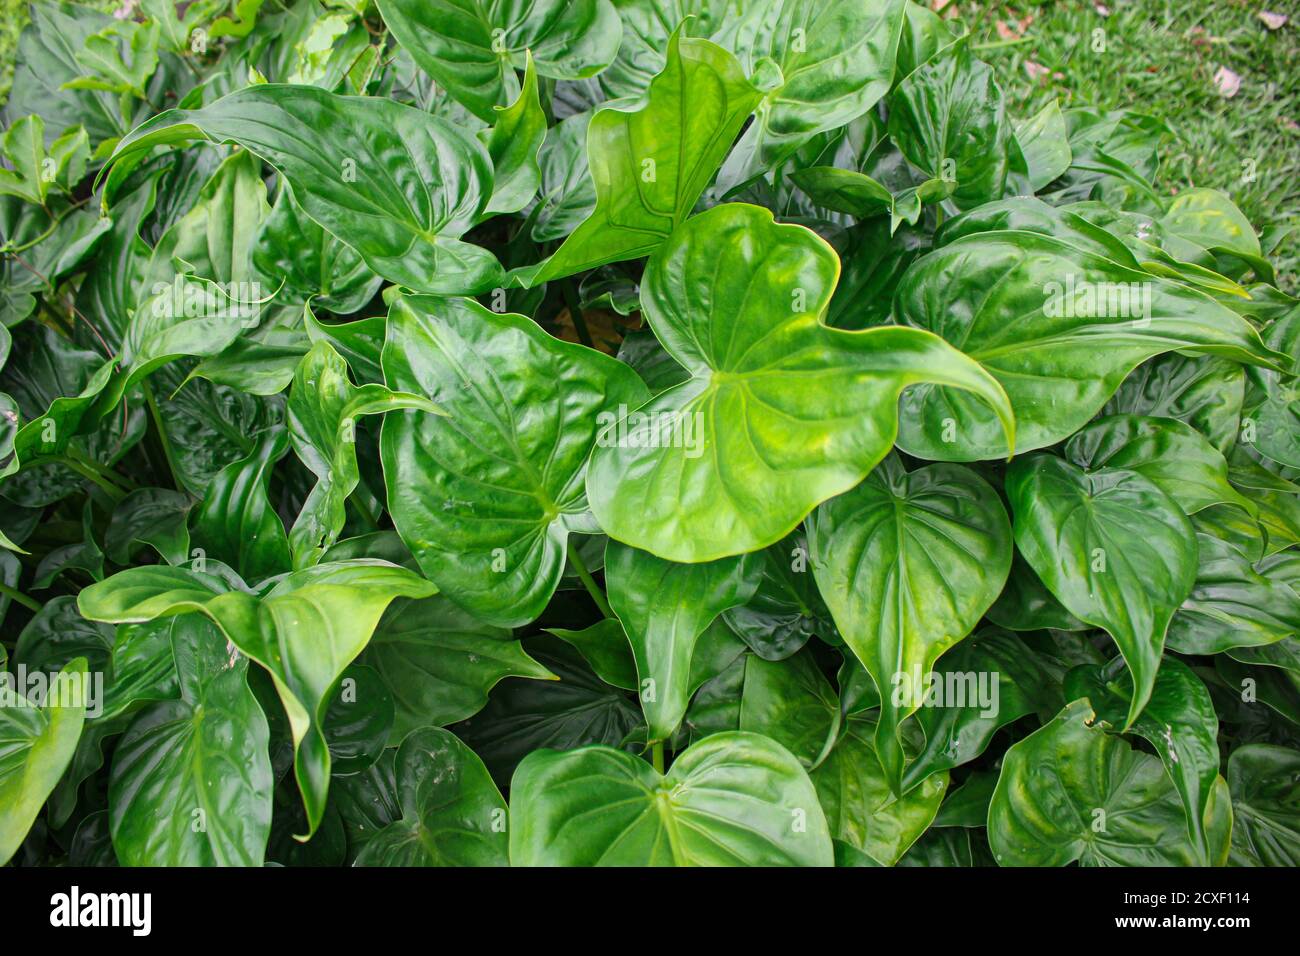 Tropische grüne Blätter, Blätter Textur asien Natur Bild Stockfoto